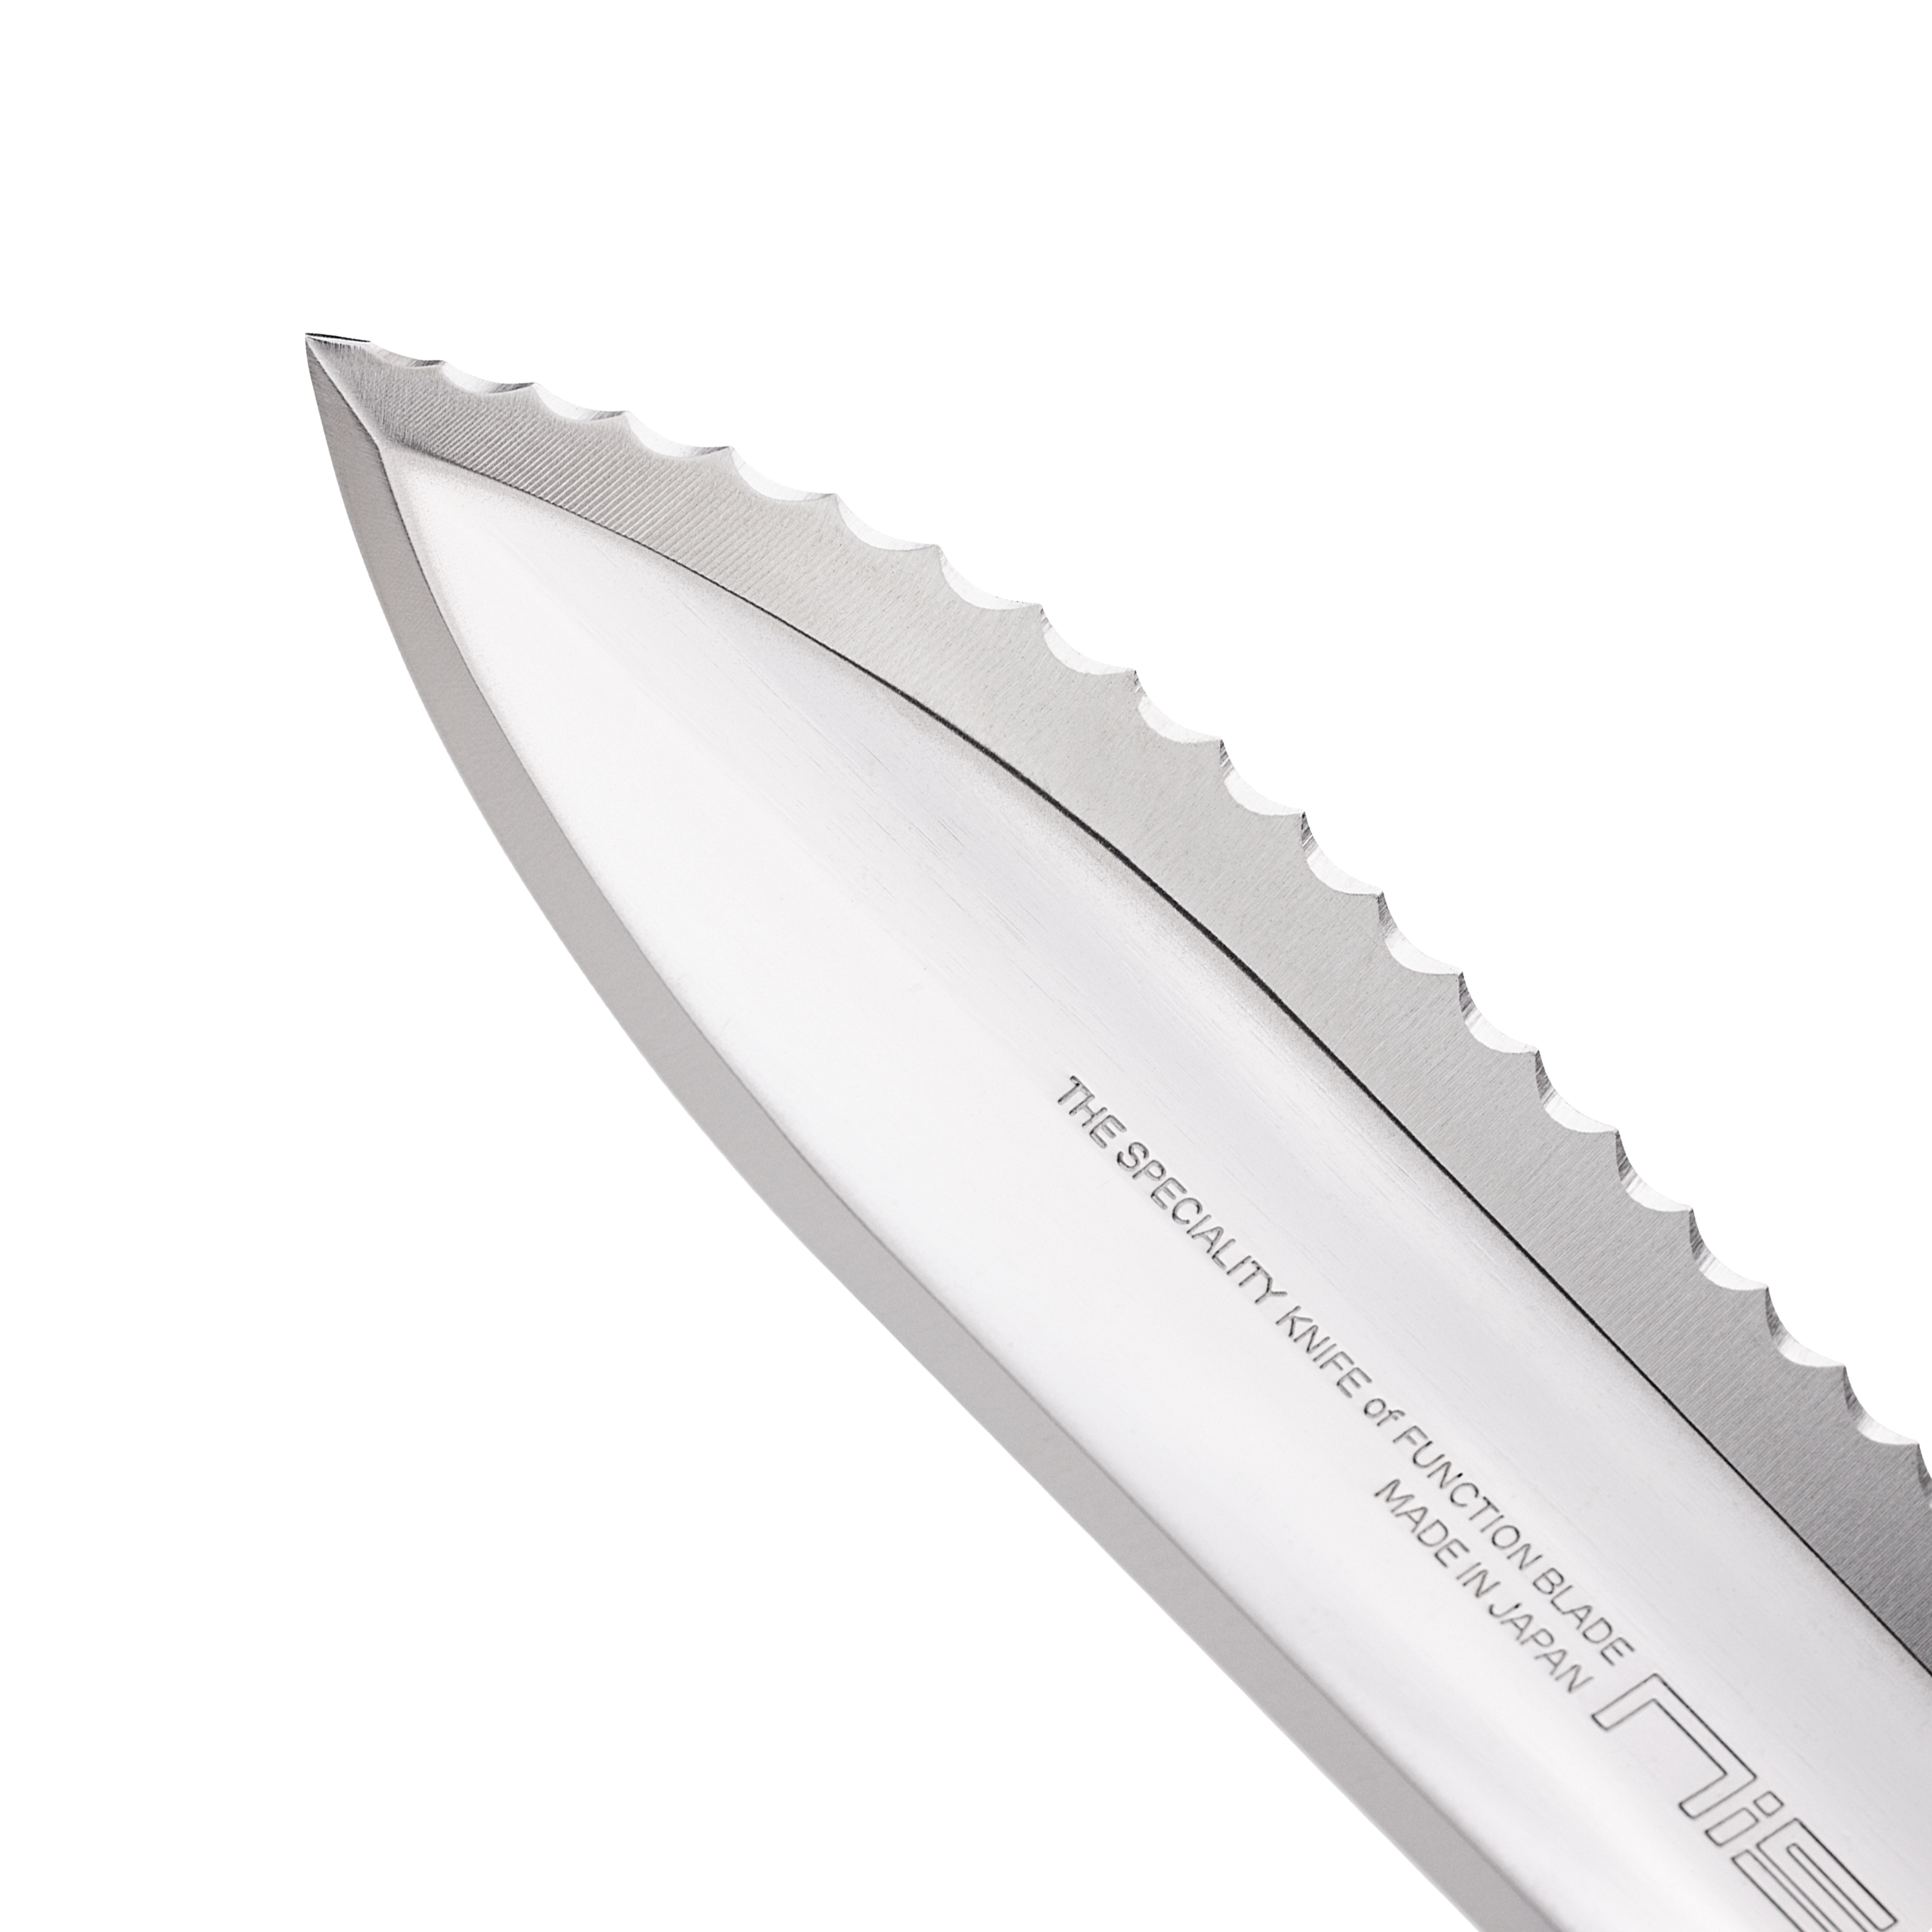 Nisaku Japanese Stainless Steel Knife, 7.5-Inch Blade